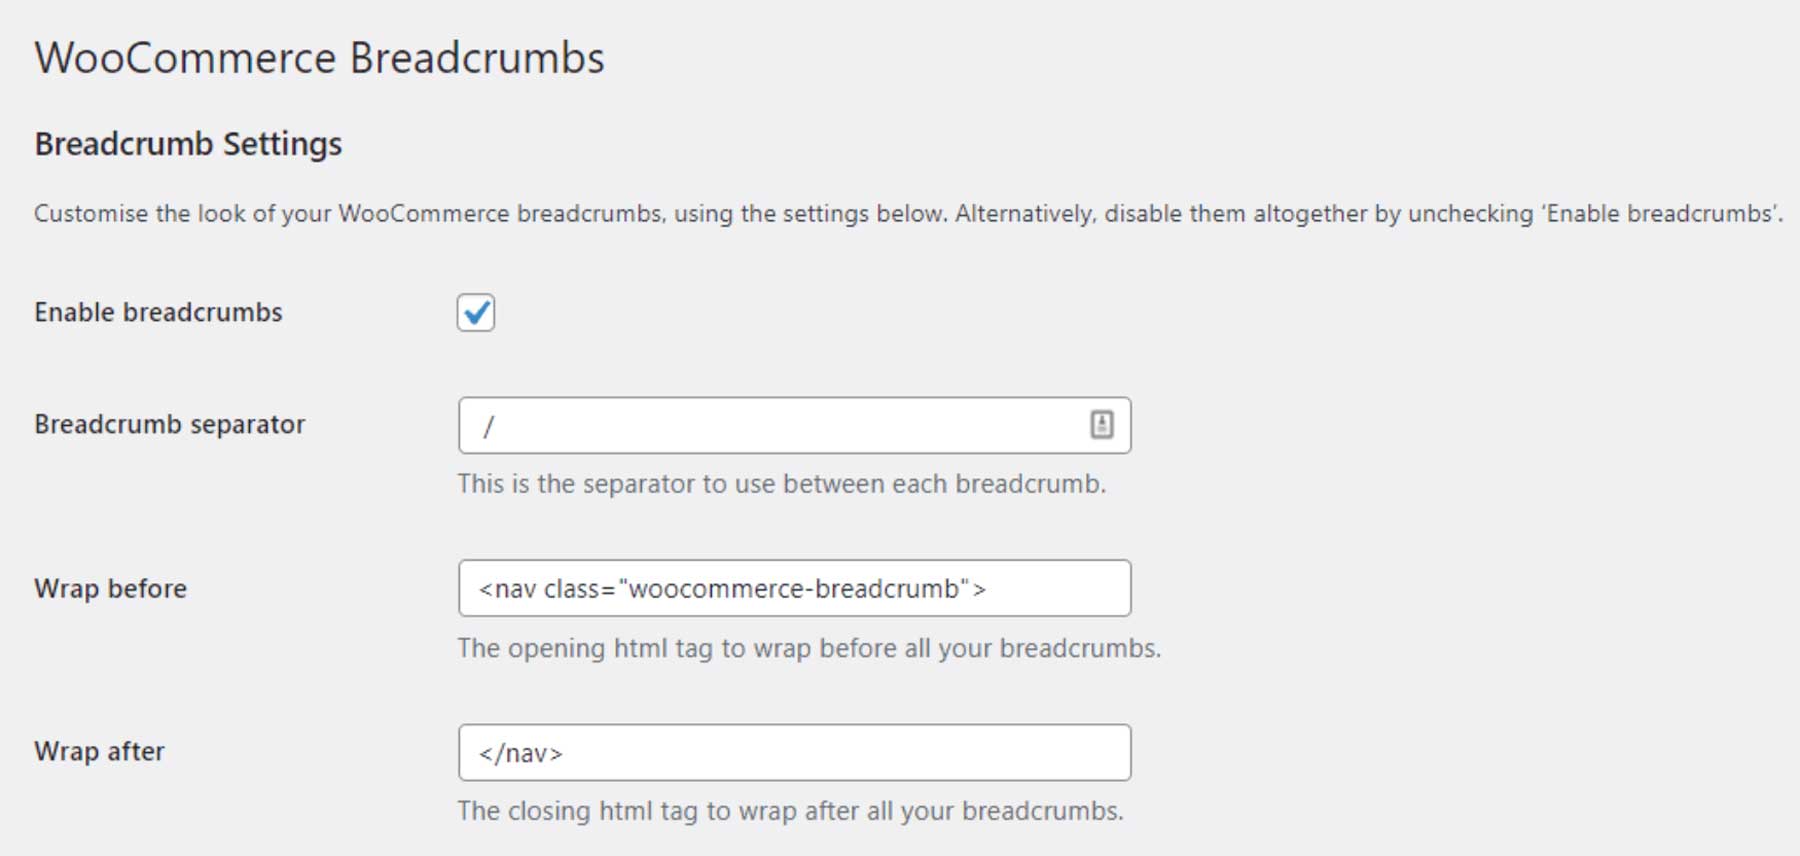 Configuring the WooCommerce Breadcrumbs plugin